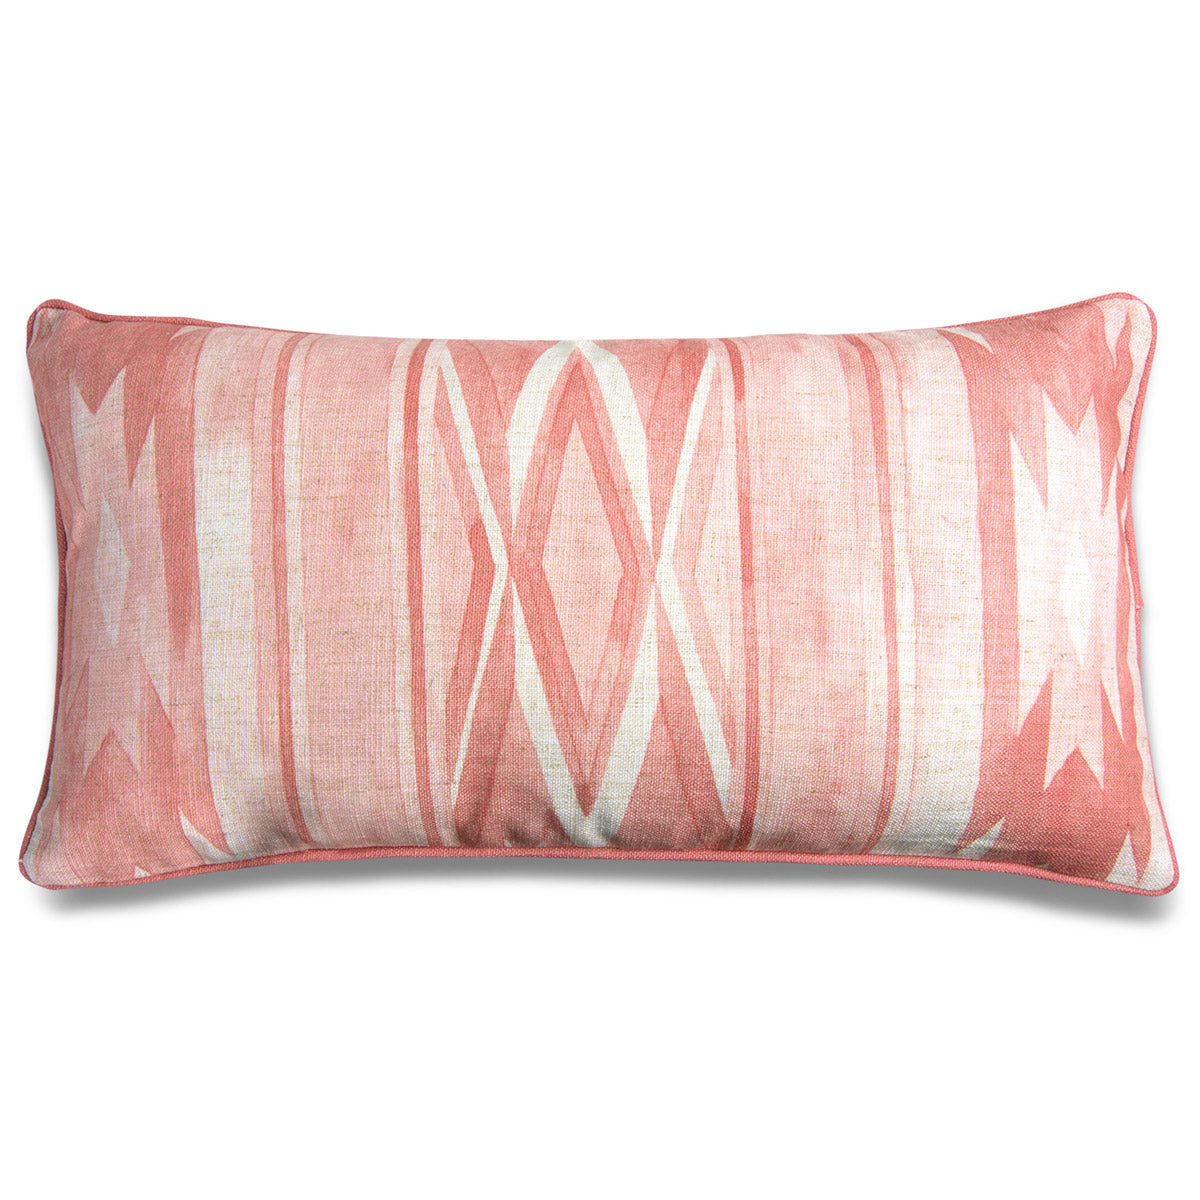 Southwest Lumbar Pillow in Blush - ModShop1.com